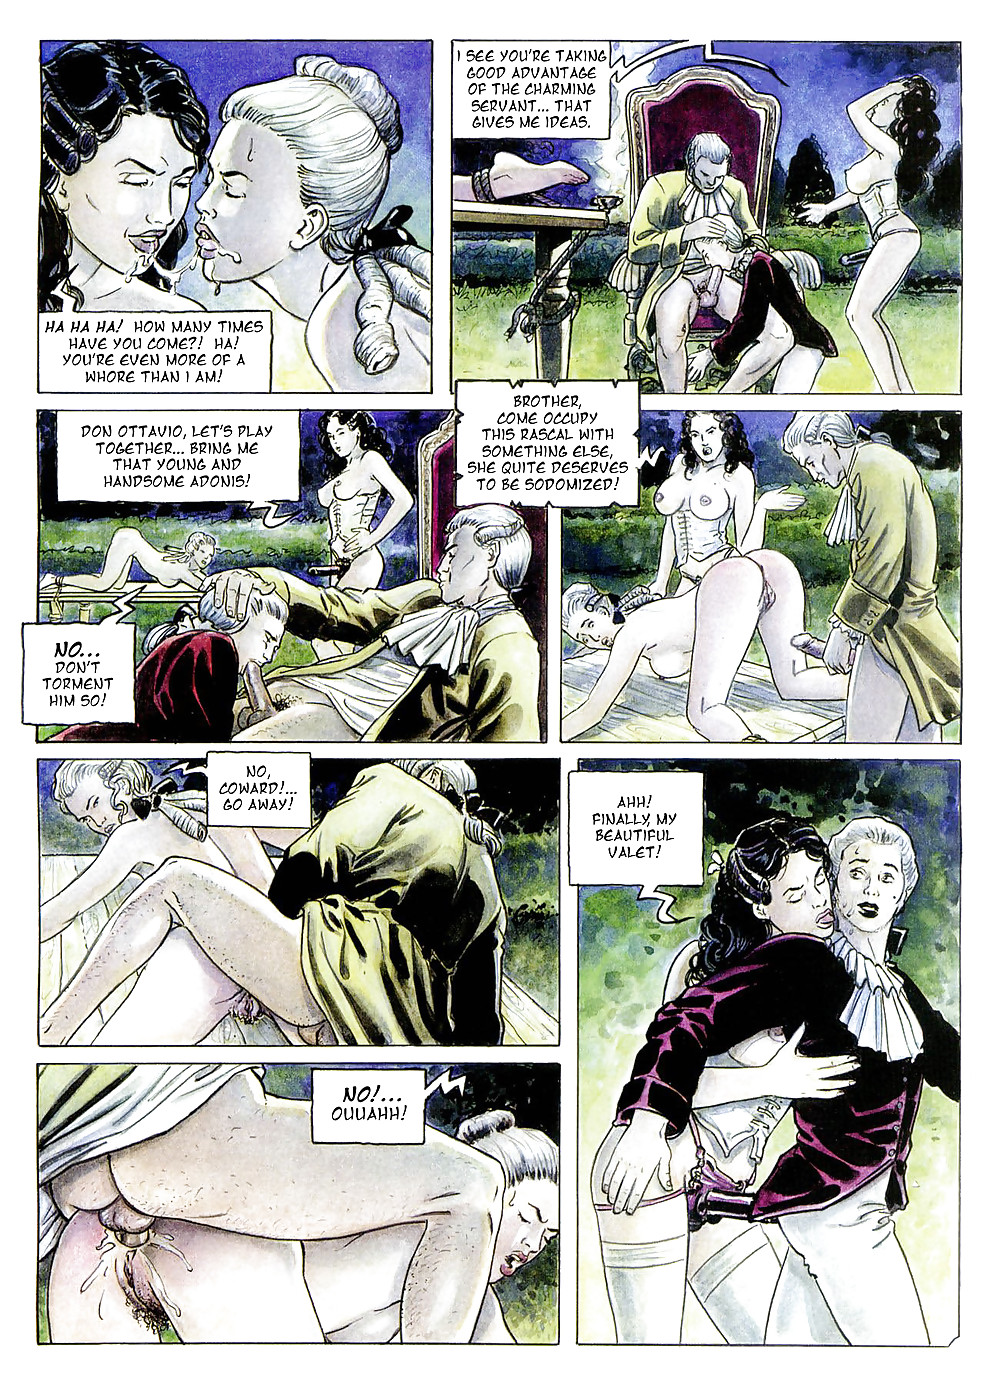 Erotic Comic Art14 -  Don Giovanni #17531489